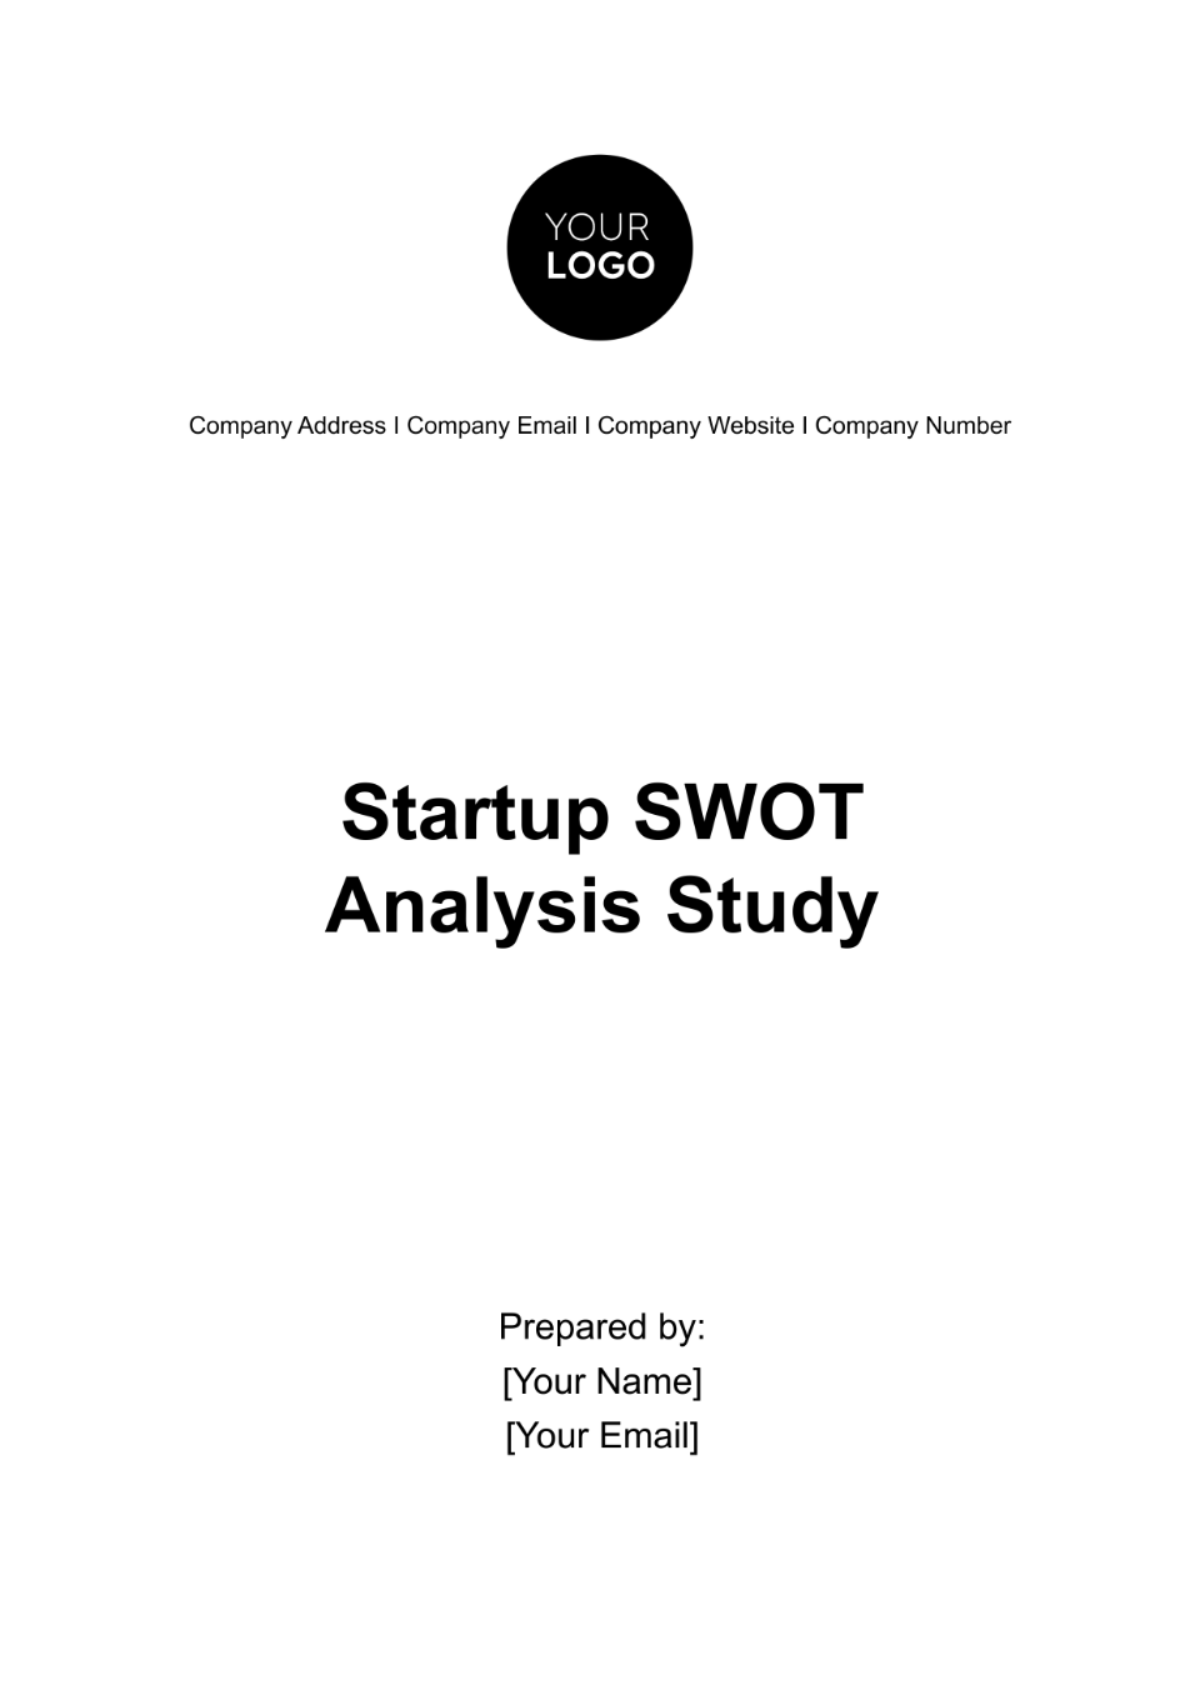 Startup SWOT Analysis Study Template